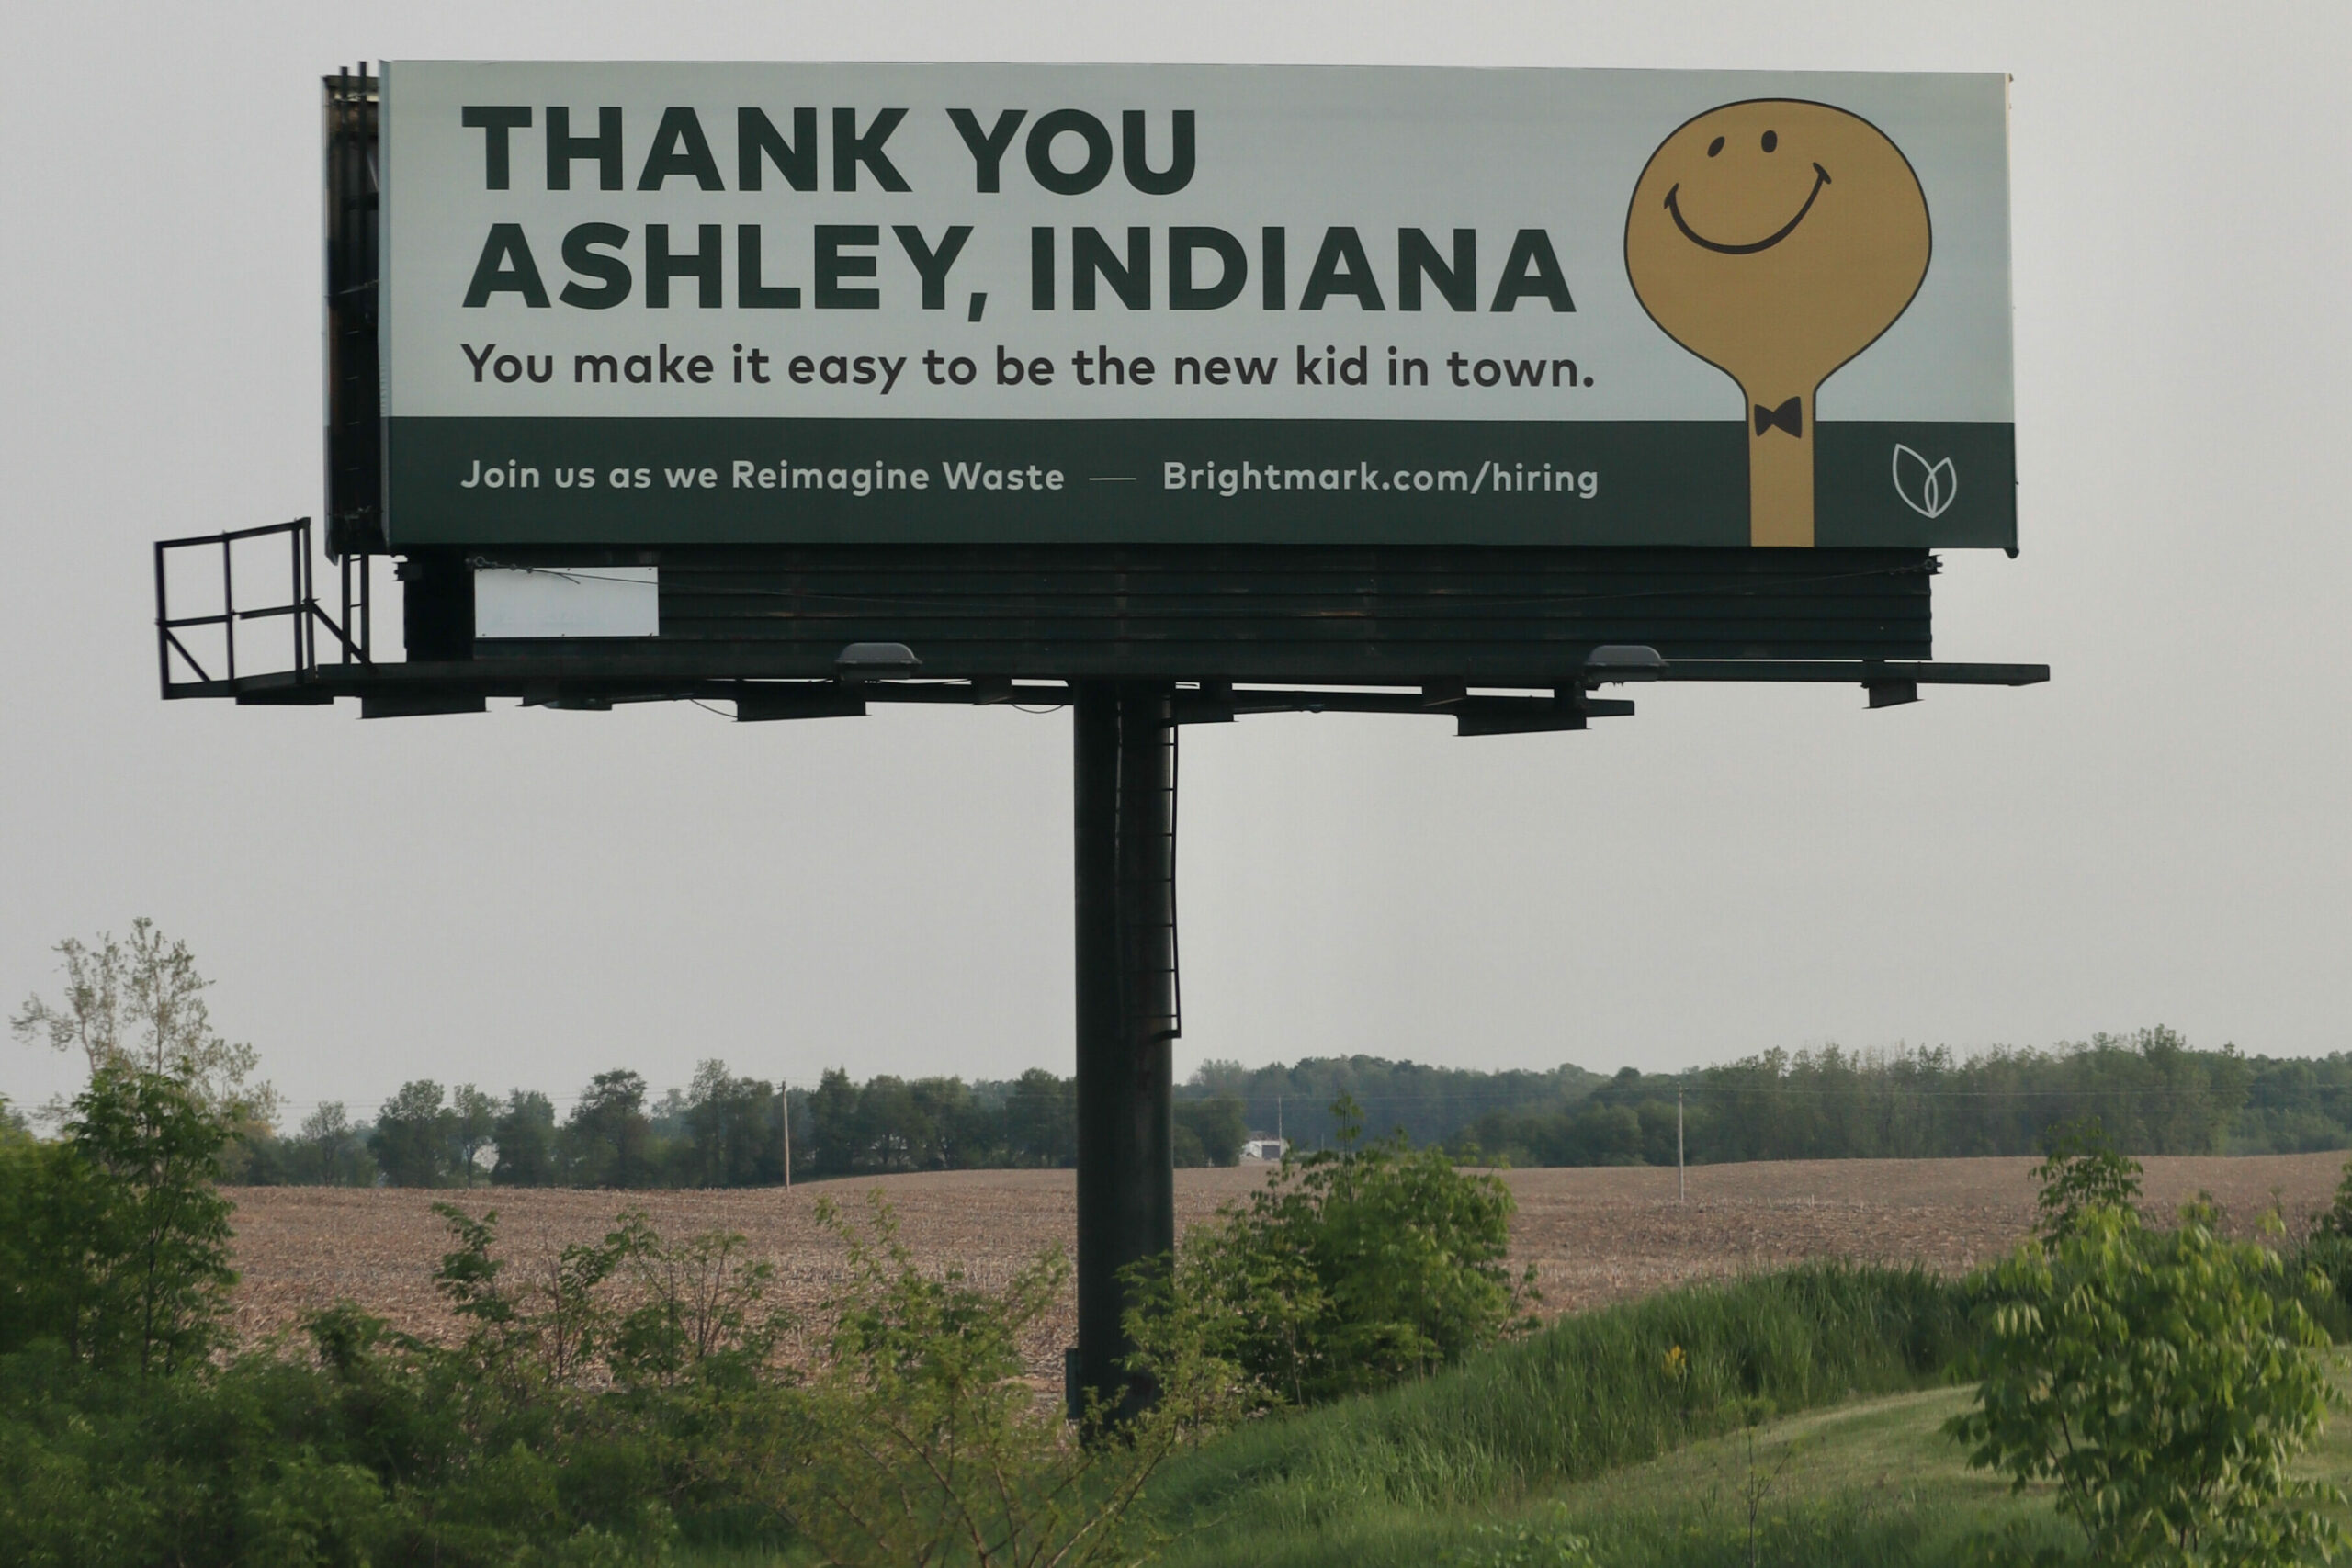 A Brightmark billboard near Ashley, Indiana. Credit: James Bruggers